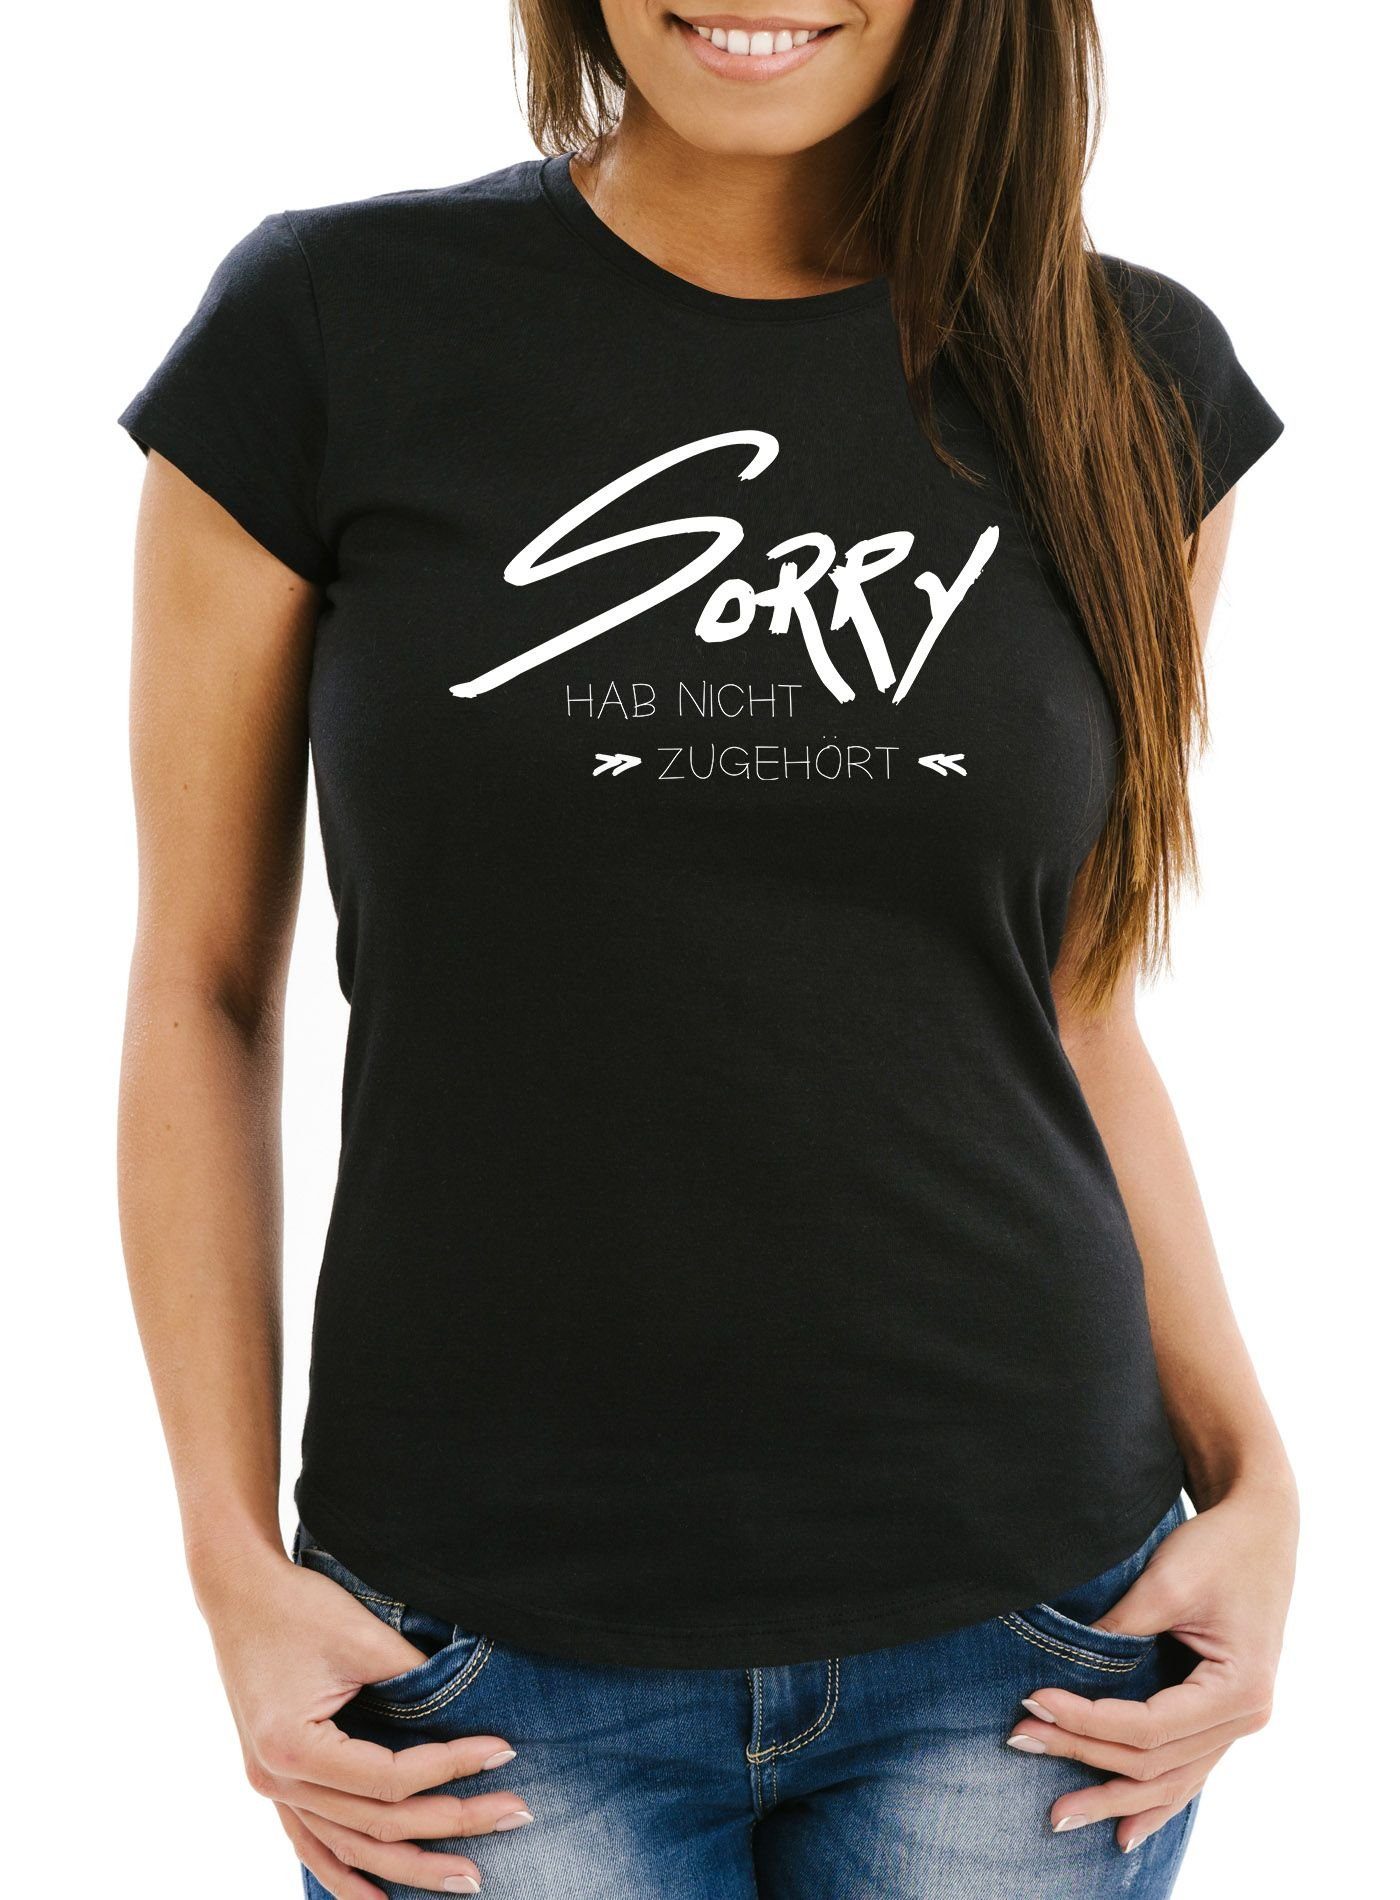 MoonWorks Print-Shirt Damen T-Shirt Sorry hab nicht zugehört Slim Fit Spruch-Shirt Fun-Shirt Moonworks® mit Print